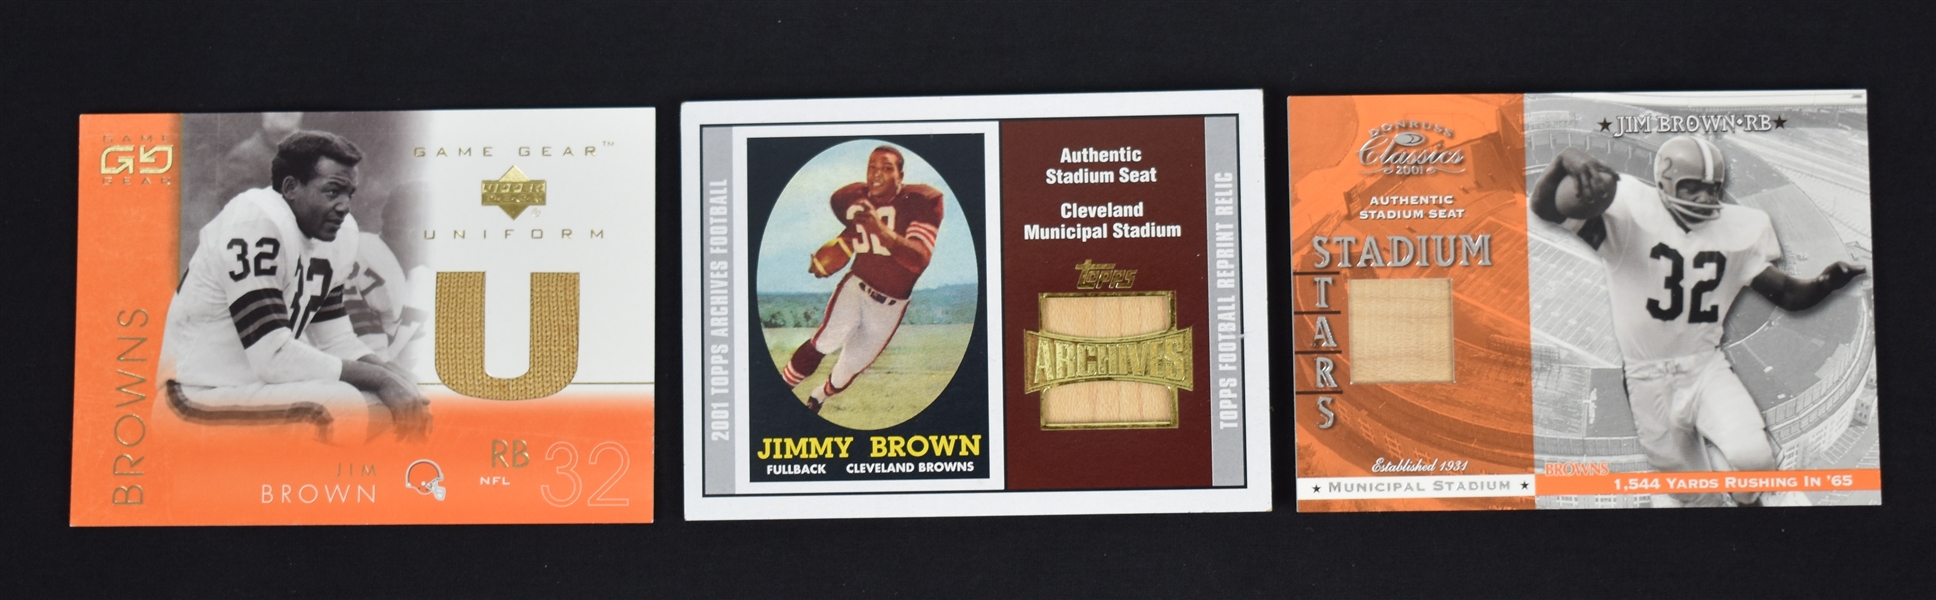 Jim Brown Lot of 3 Game Used Jersey & Stadium Seat Cards